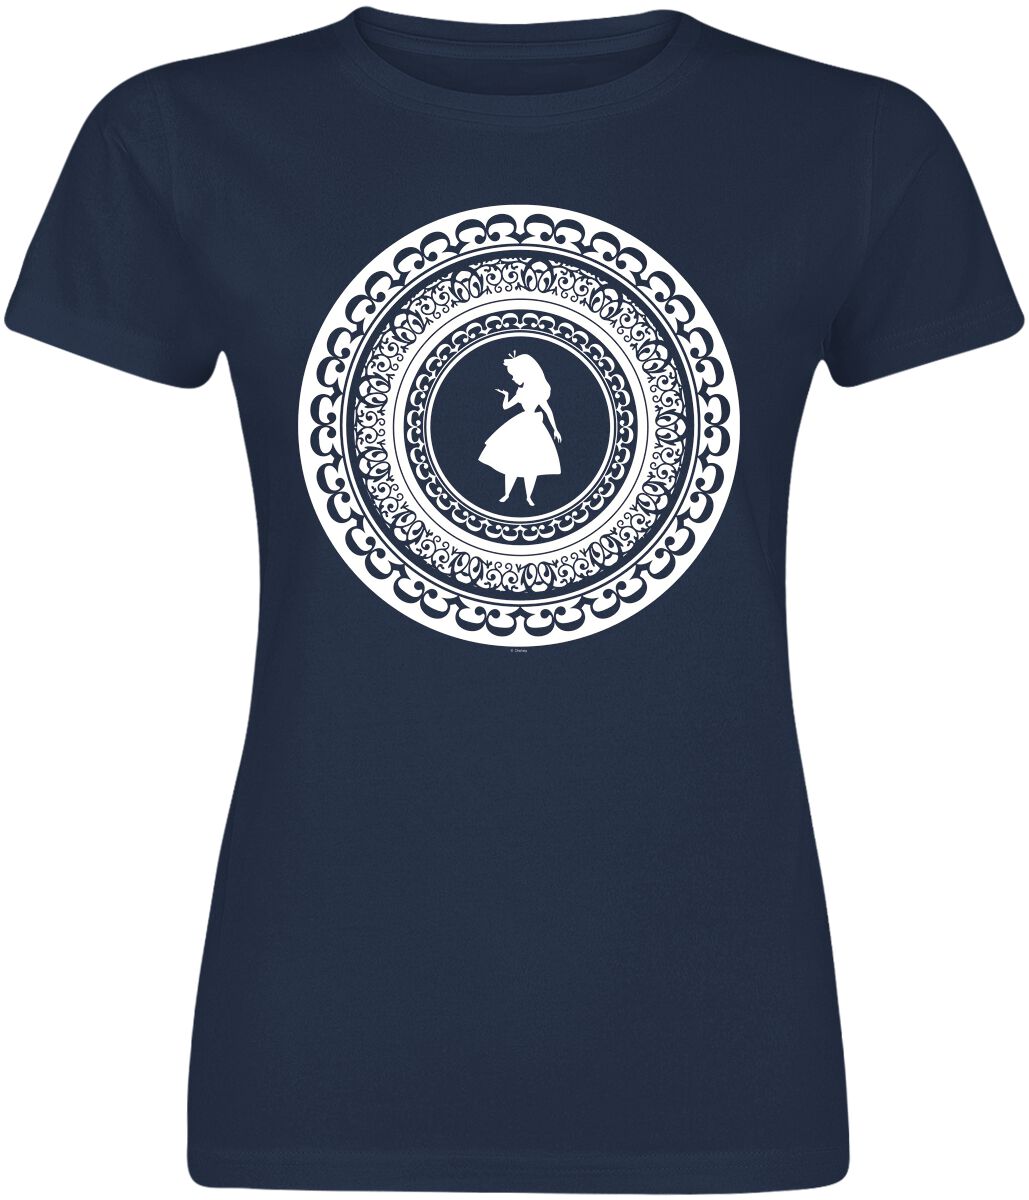 Alice in Wonderland Circle T-Shirt navy